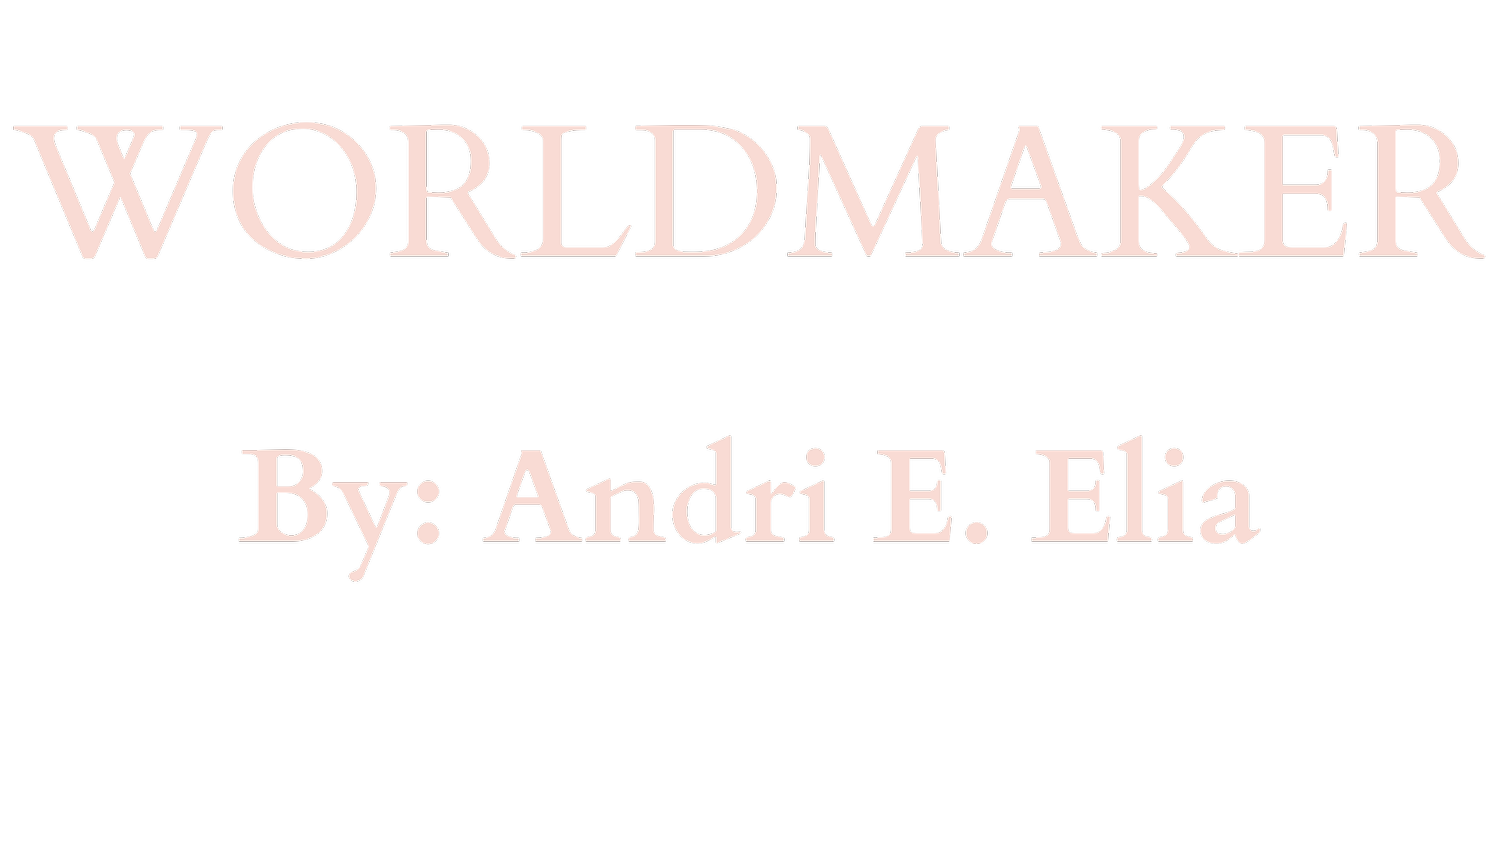 WORLDMAKER by Andri E. Elia